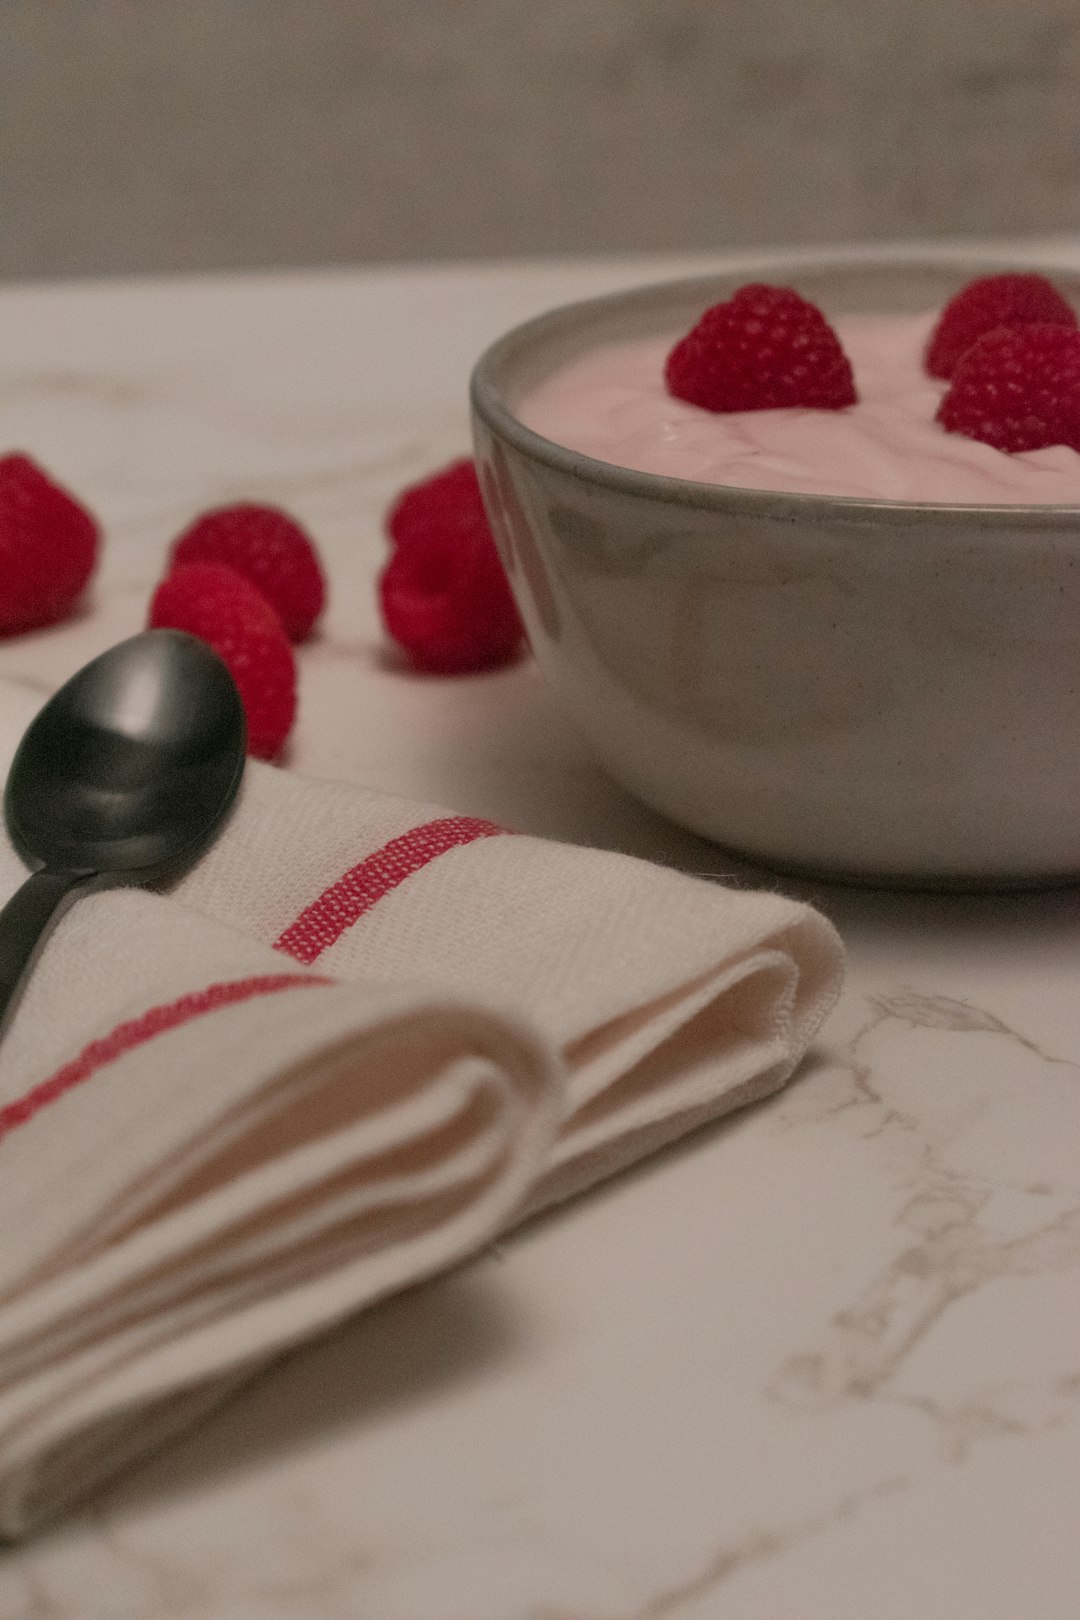 red strawberries in white ceramic bowl